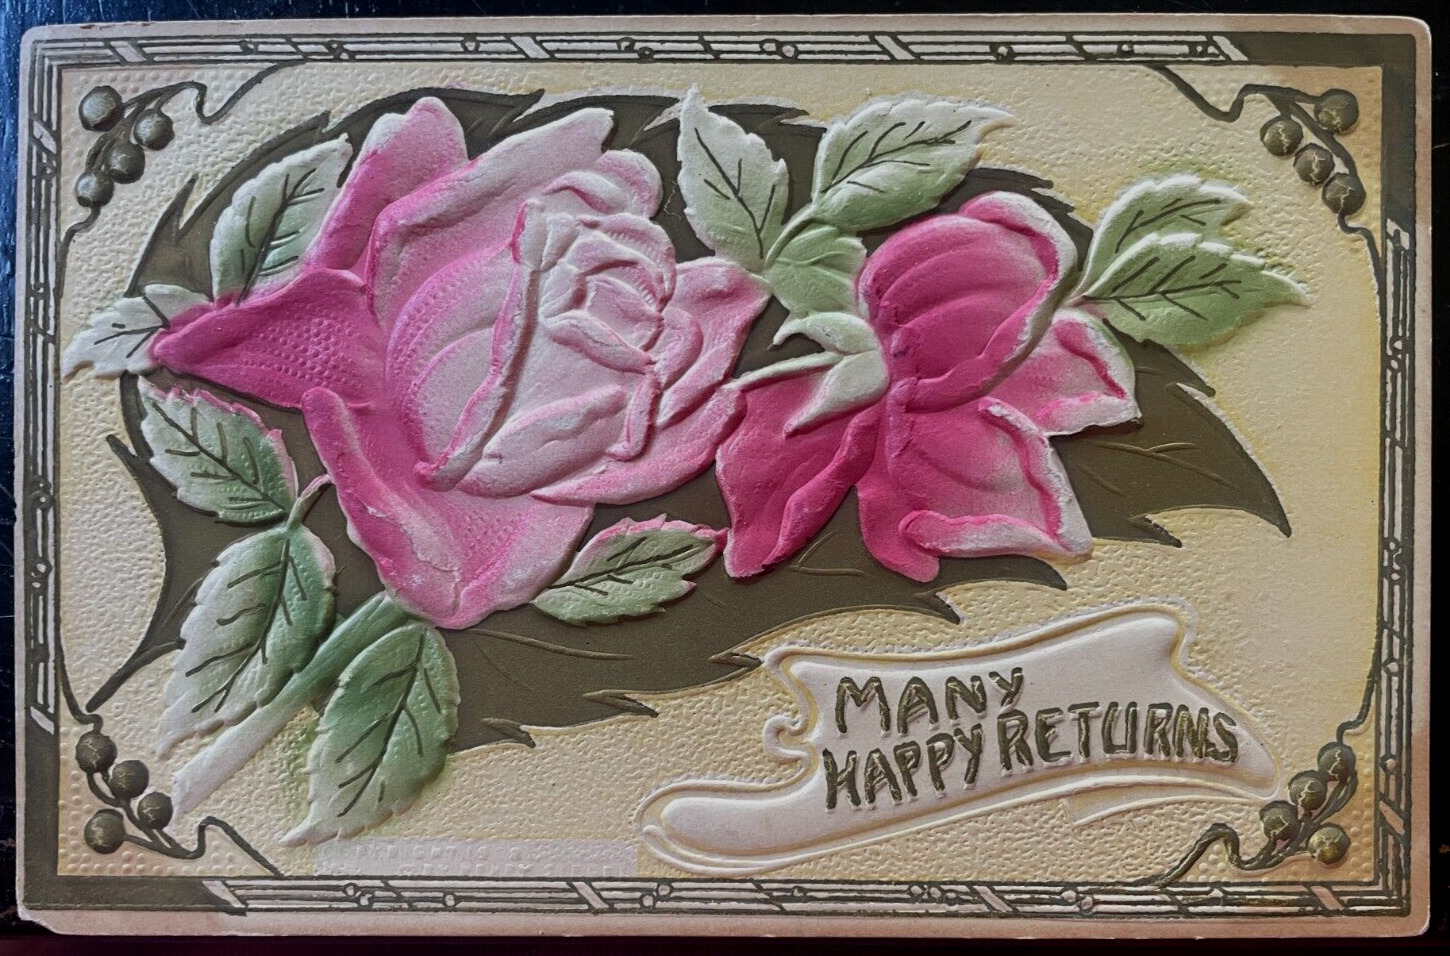 Vintage Victorian Postcard 1910 Many Happy Returns - Deep Embossed Pink Rose